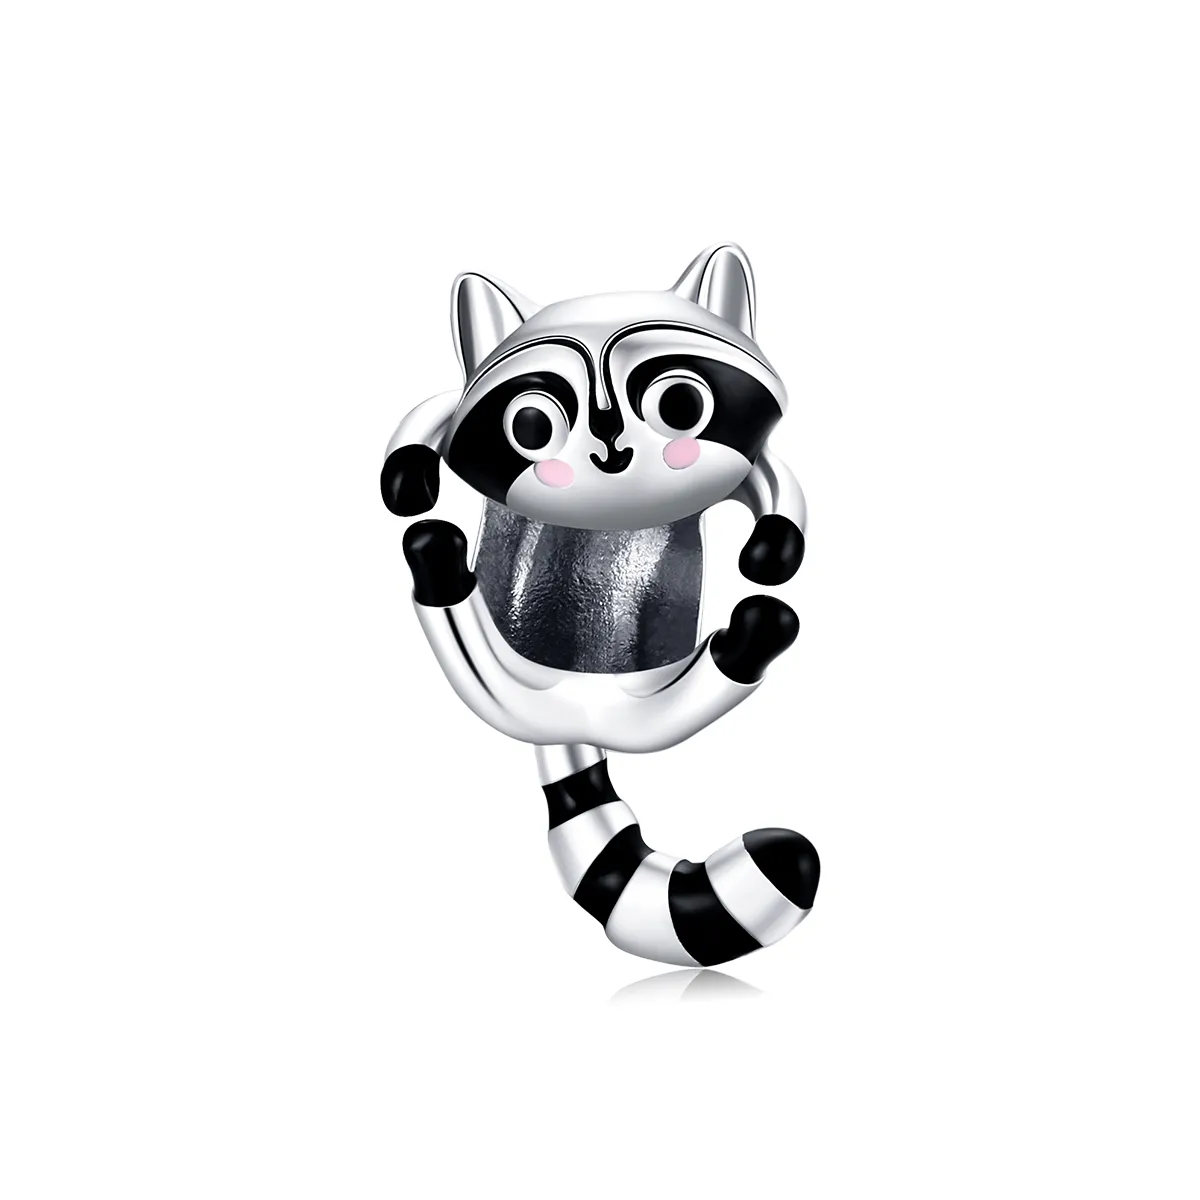 Pandora Style Silver Little Raccoon Charm - BSC403